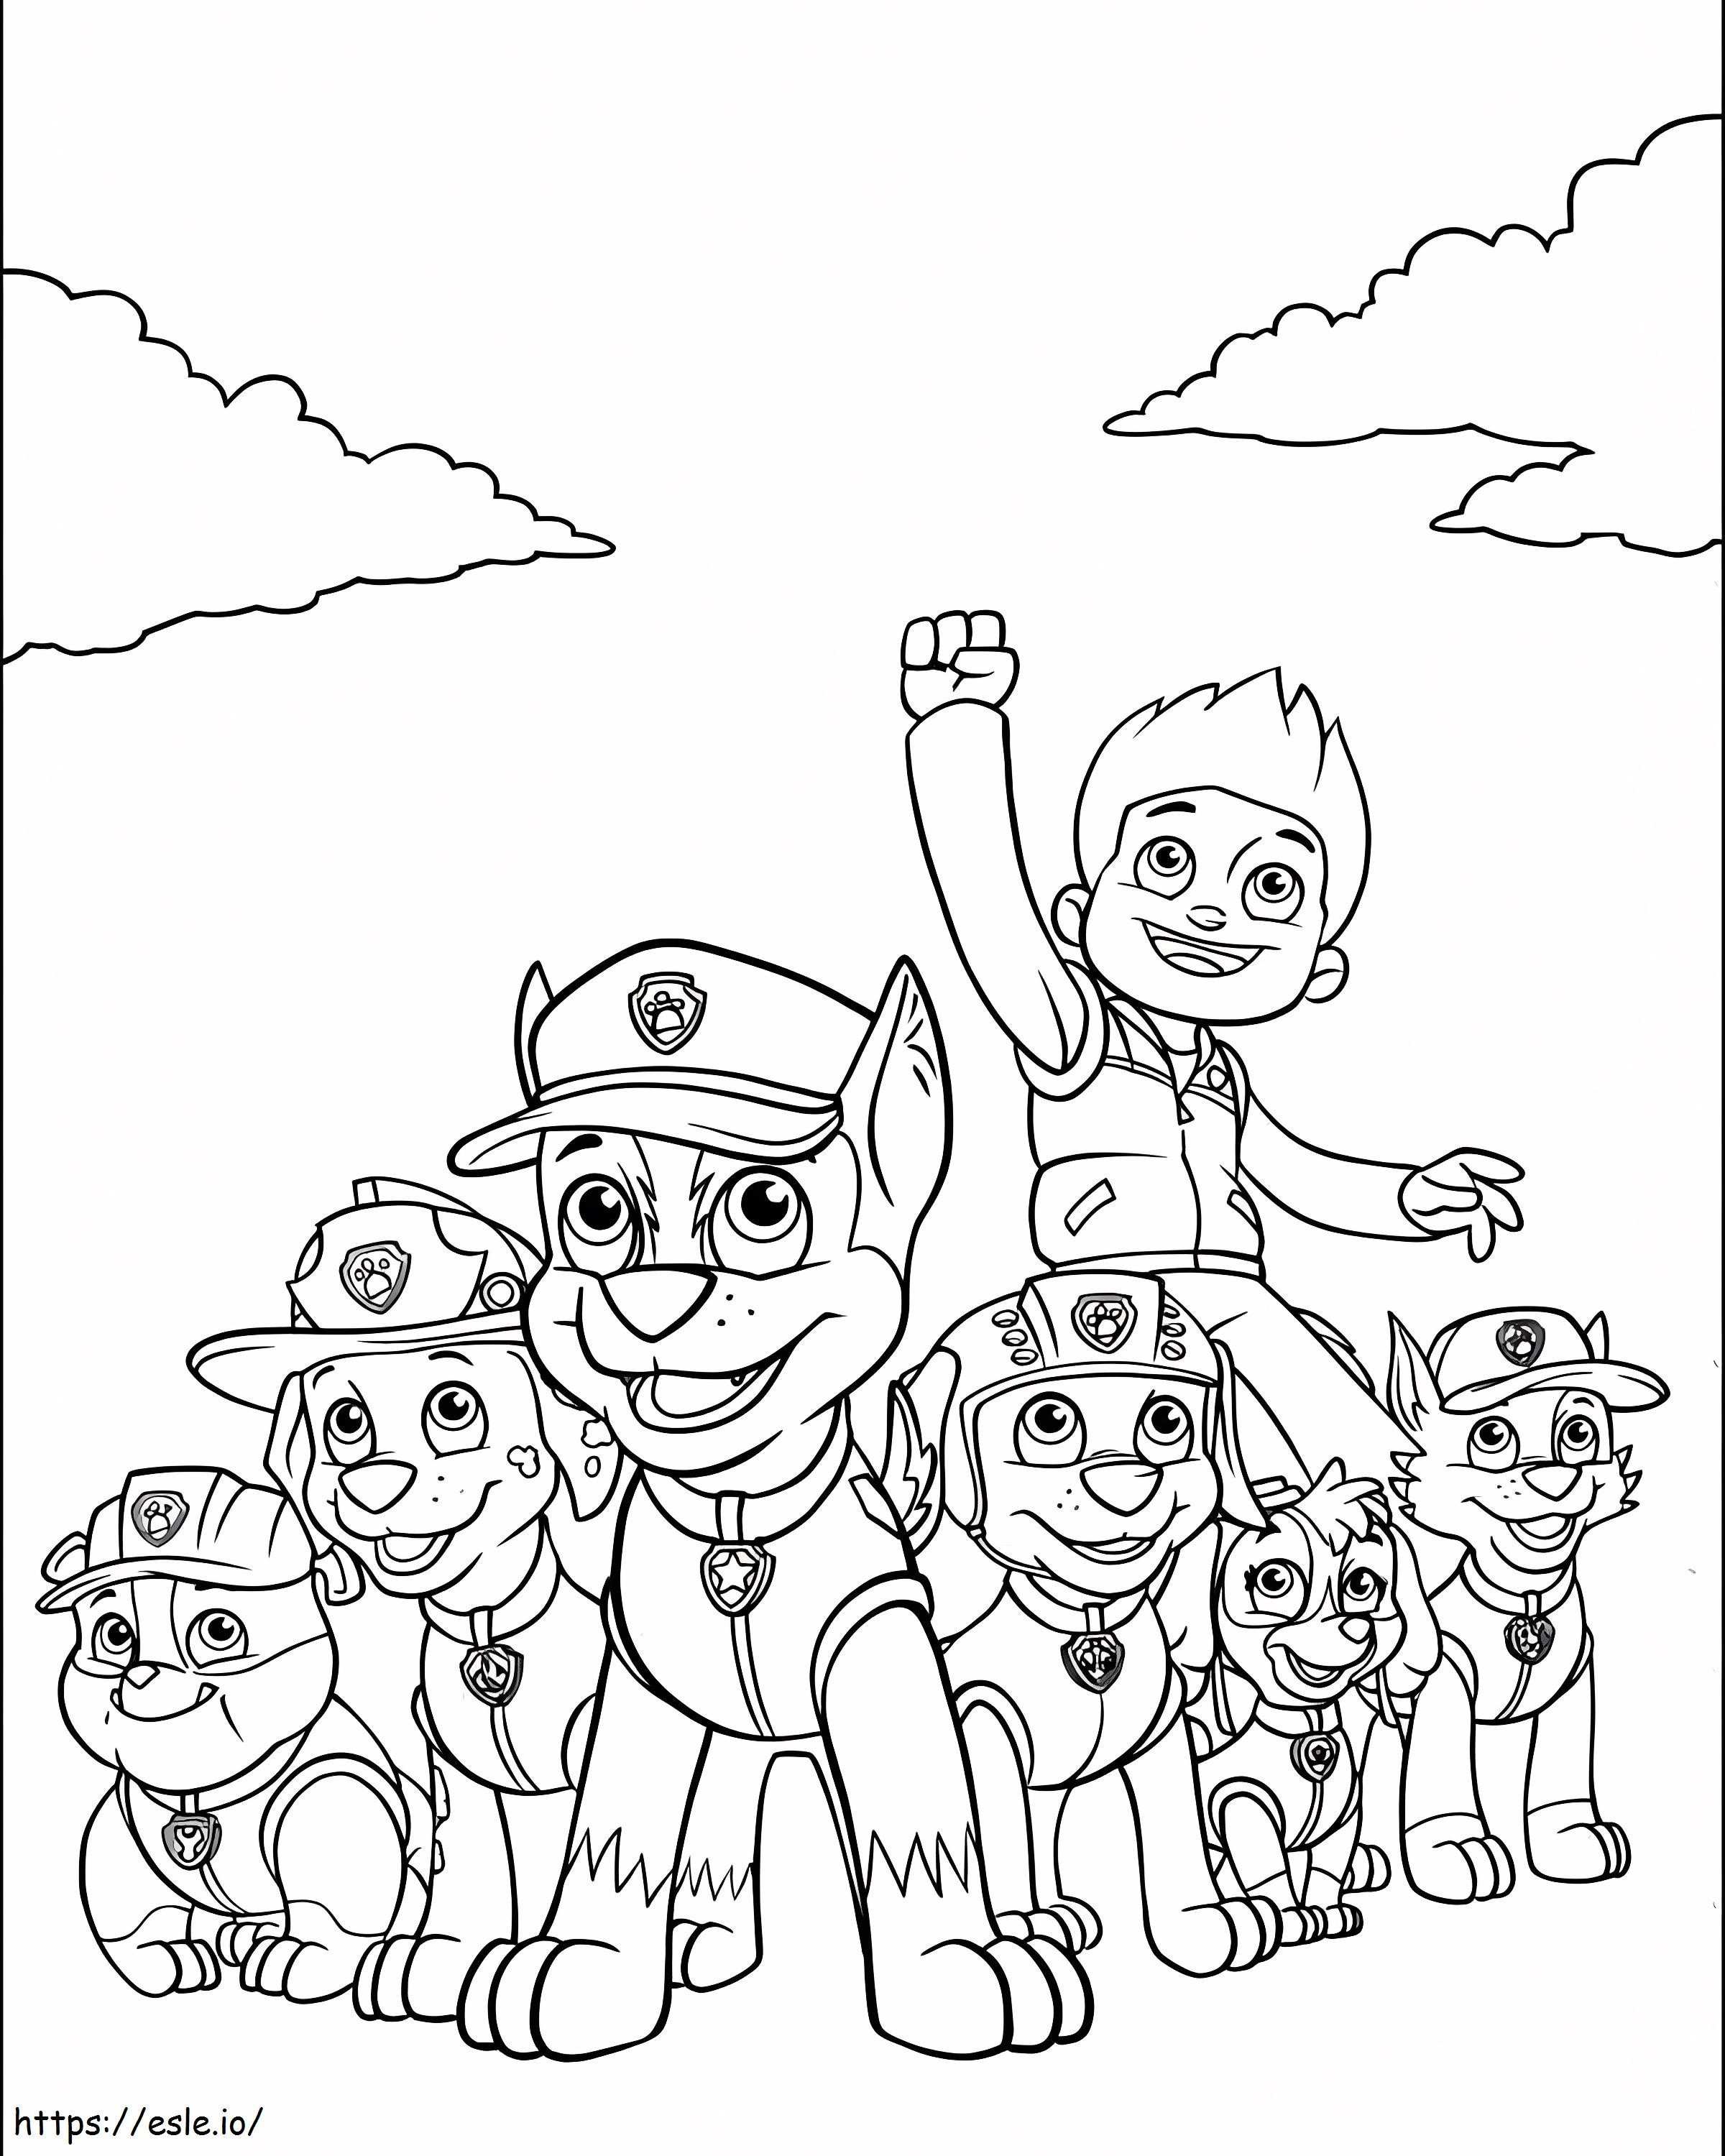 Paw Patrol 11 coloring page